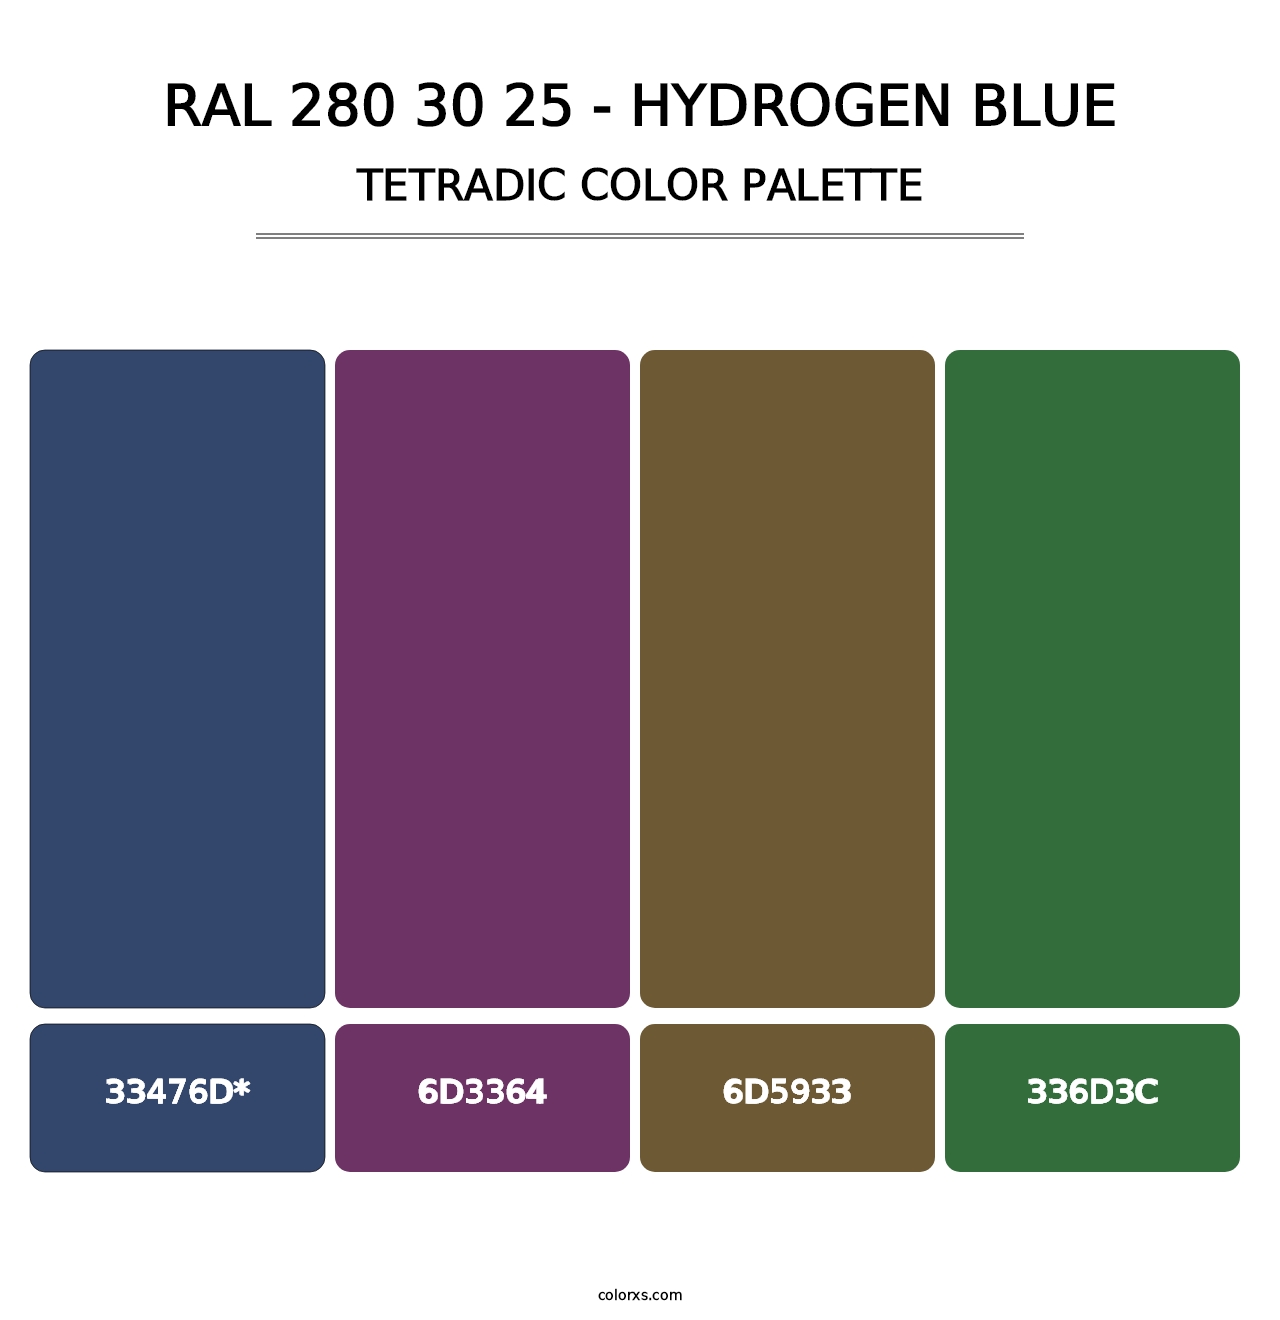 RAL 280 30 25 - Hydrogen Blue - Tetradic Color Palette